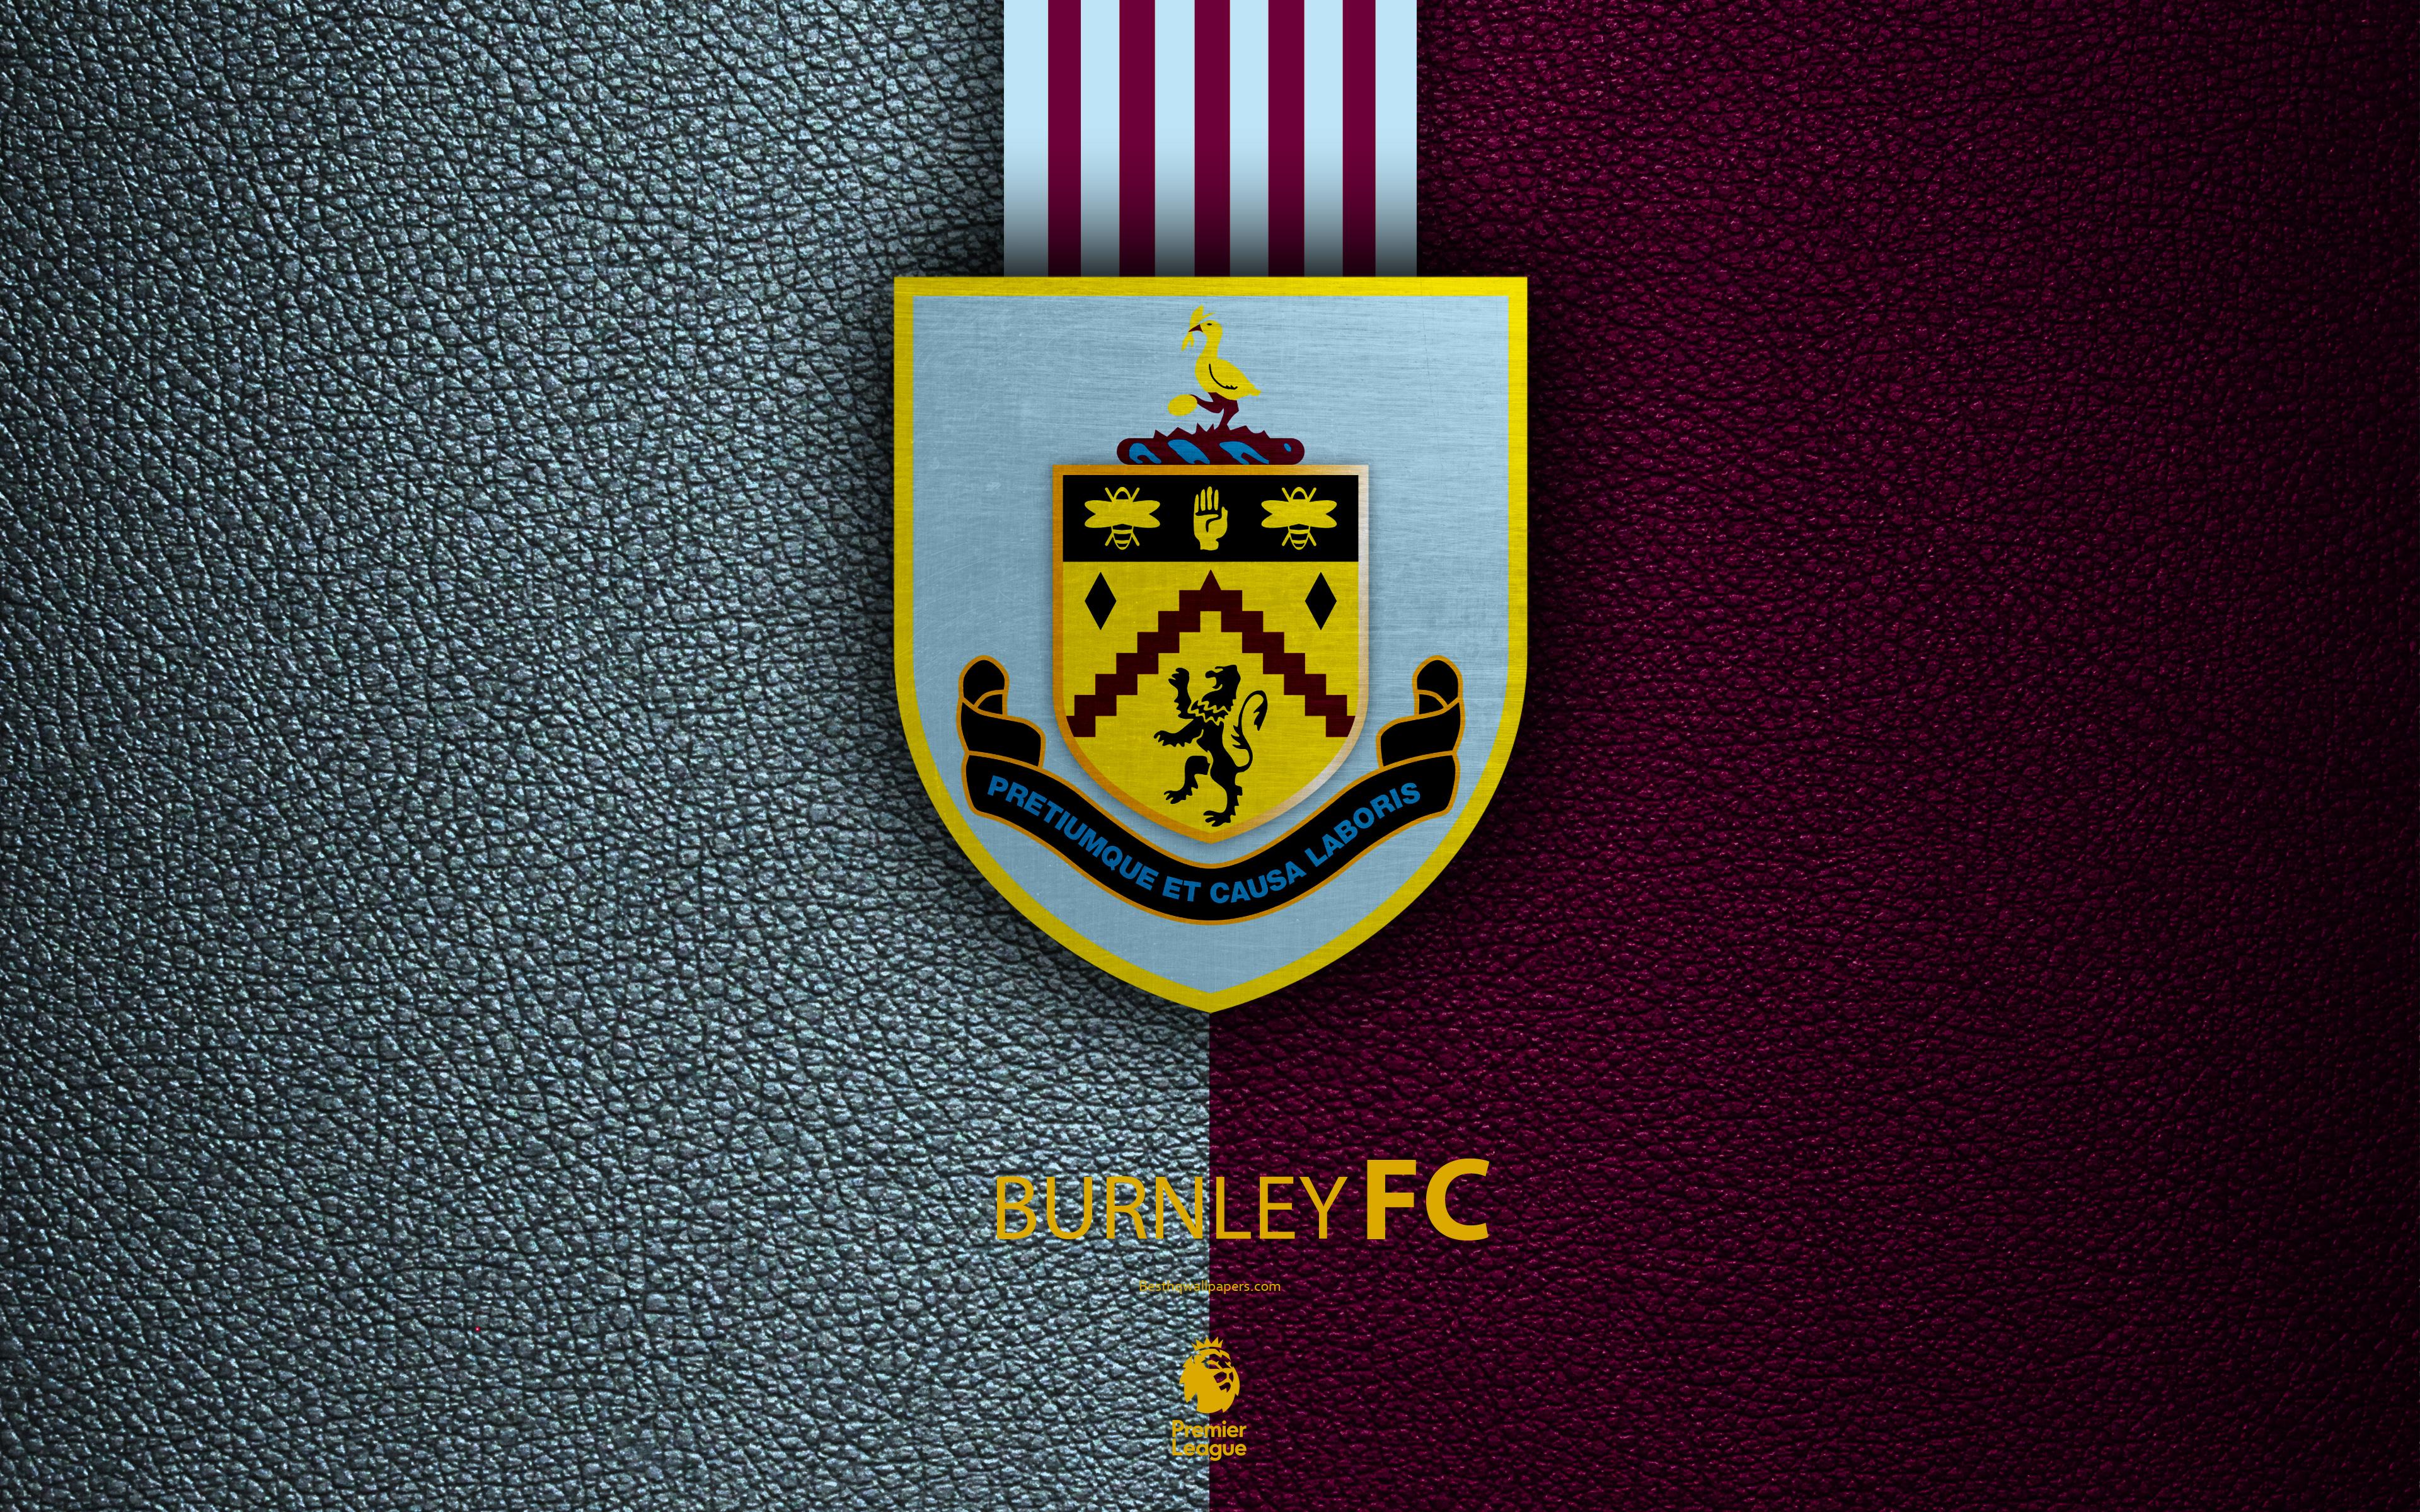 Download wallpaper Burnley FC, 4k, English football club, leather